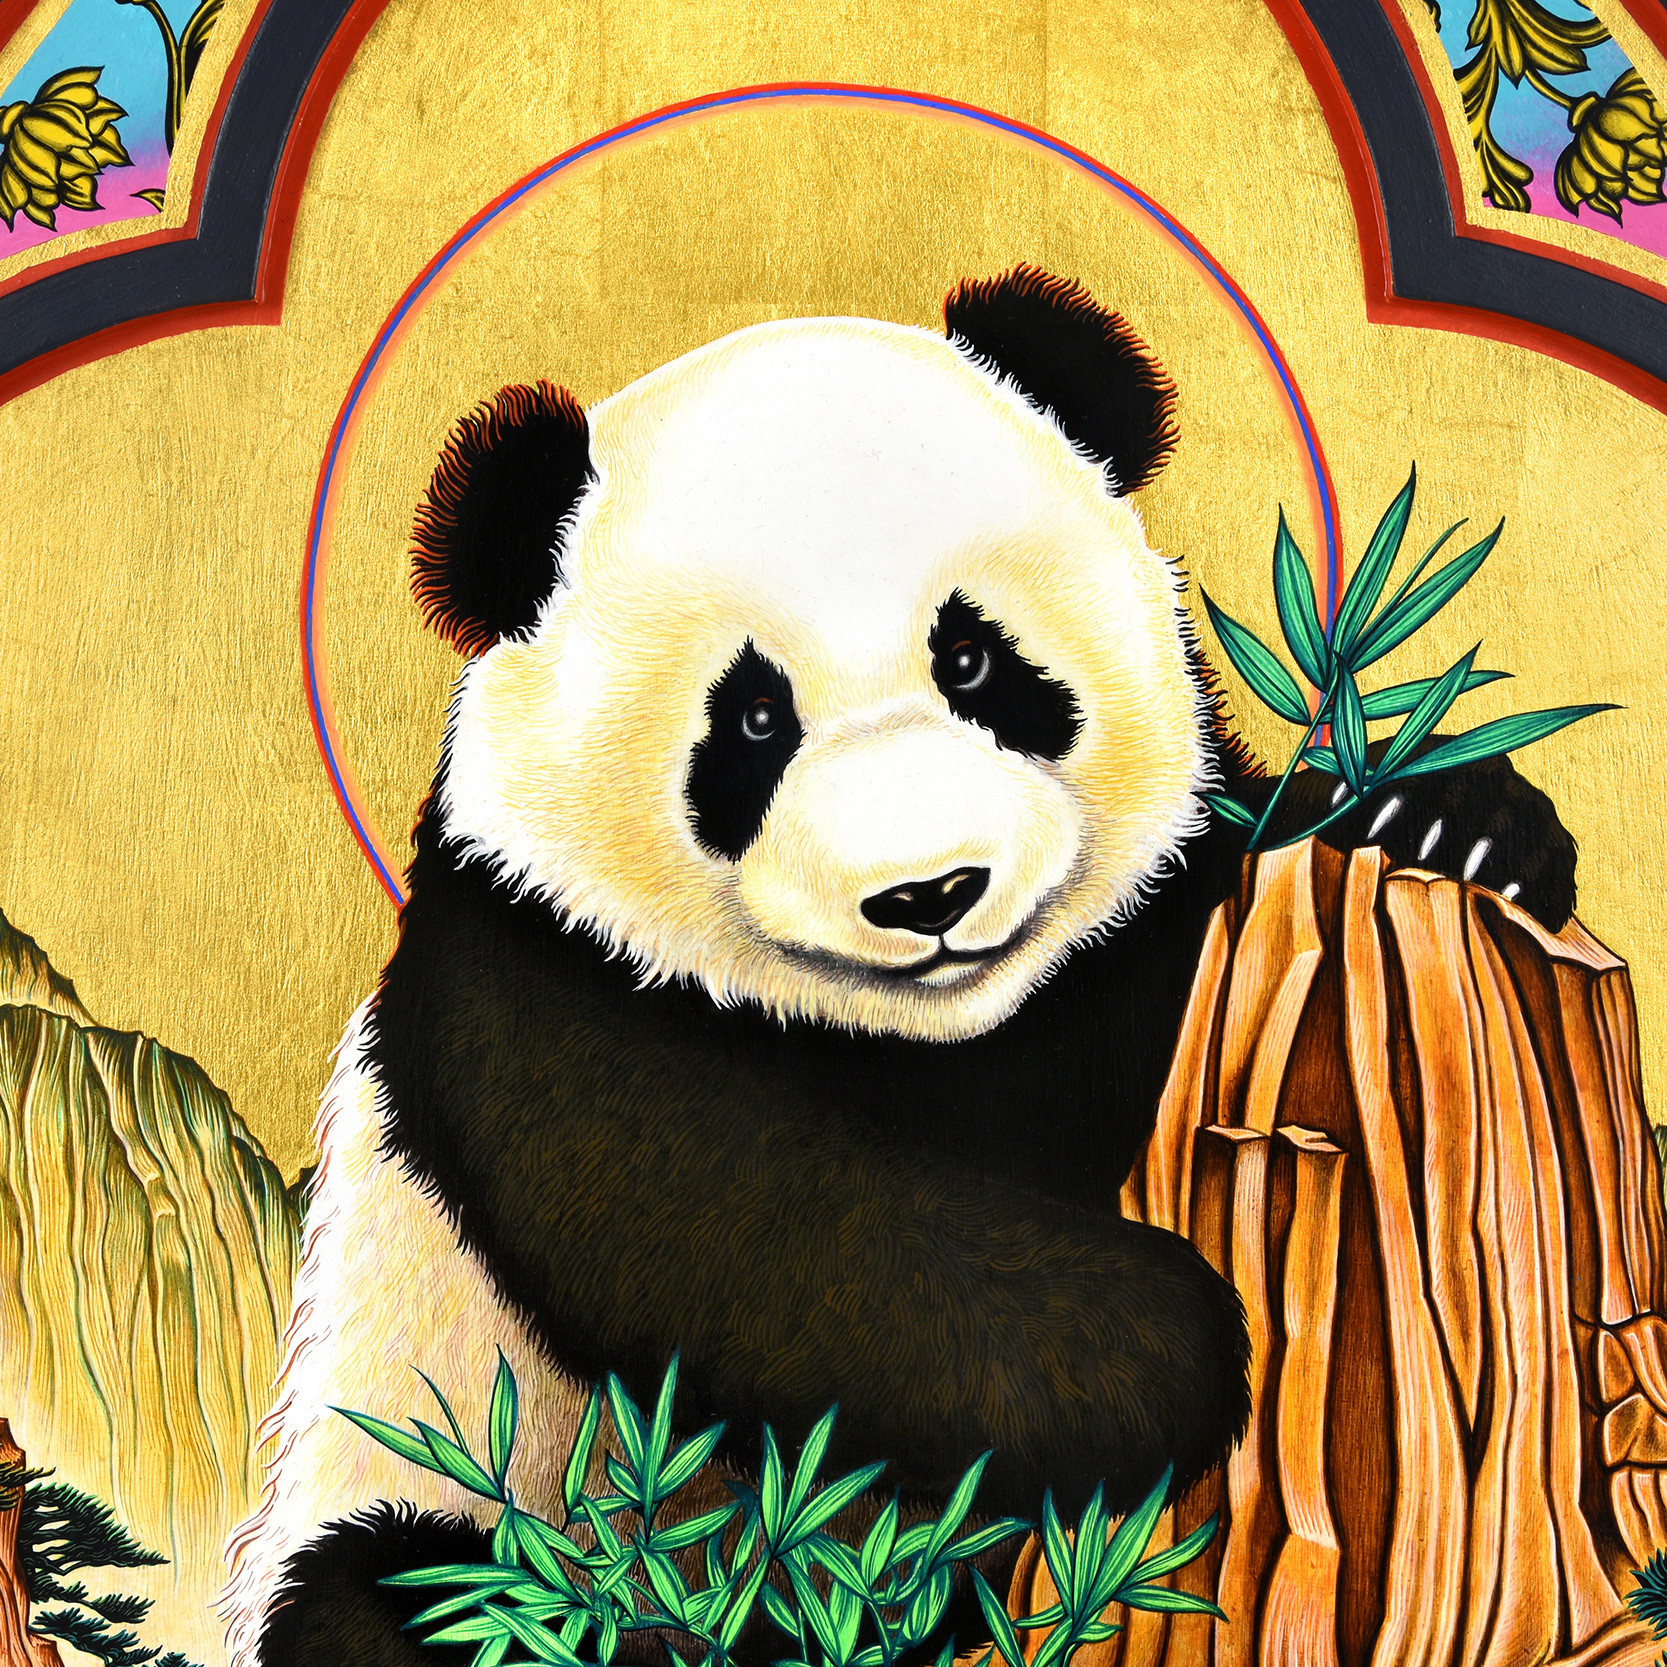 peter-d-gerakaris-panda-icon-triptych-center-panel-panda-detail-DSC_3281-2500px-square-crop copy.jpg